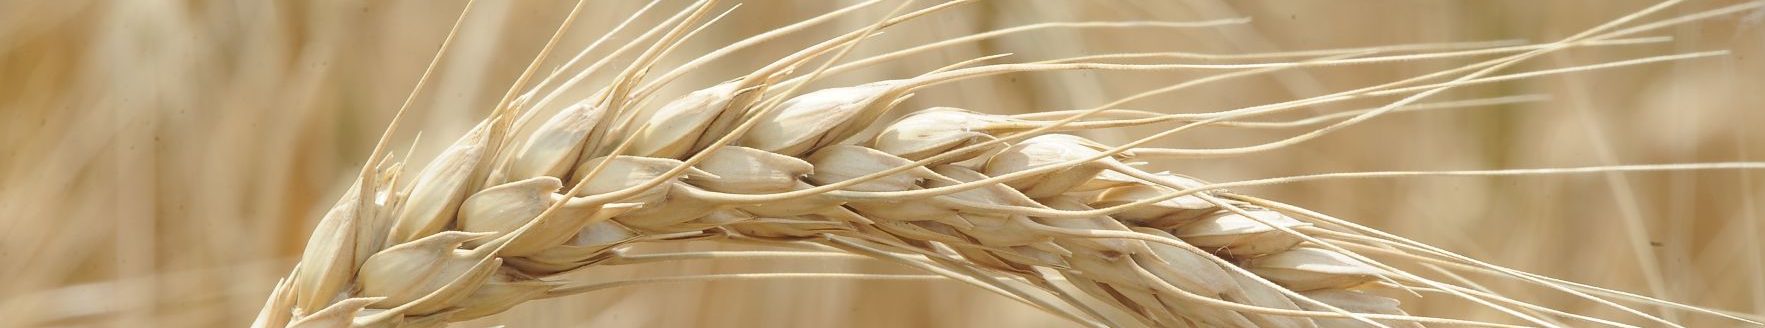 Wheat (Photo by Todd Johnson.)